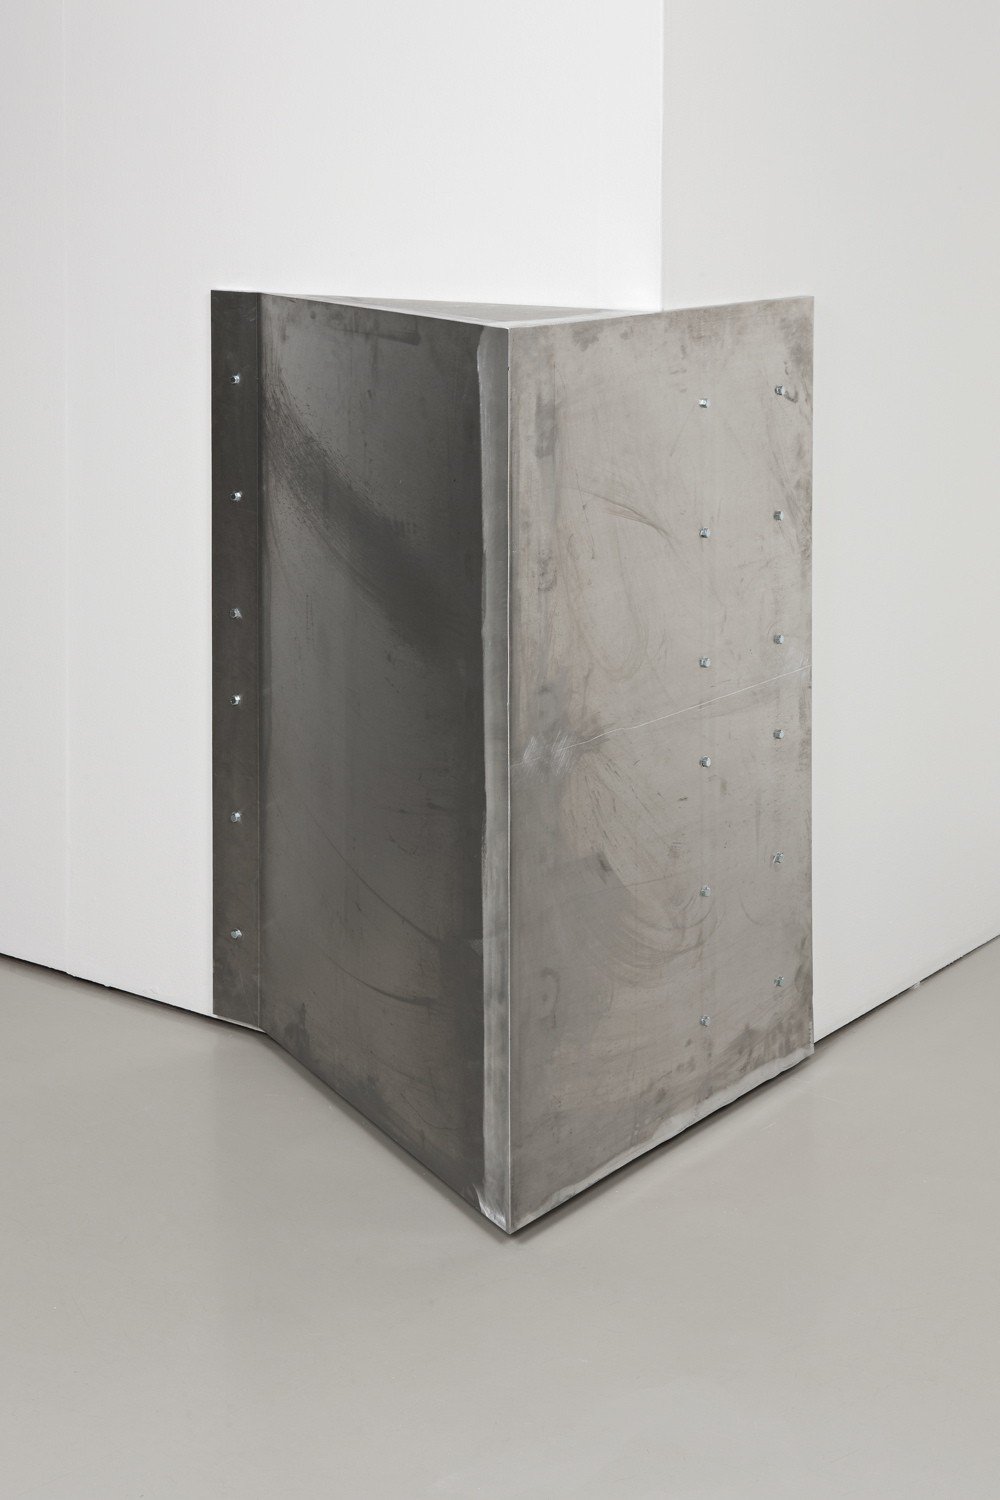 Marius EnghA Dog&#x27;s Name, 2010Welded aluminum, screws125 x 75 x 89 cm